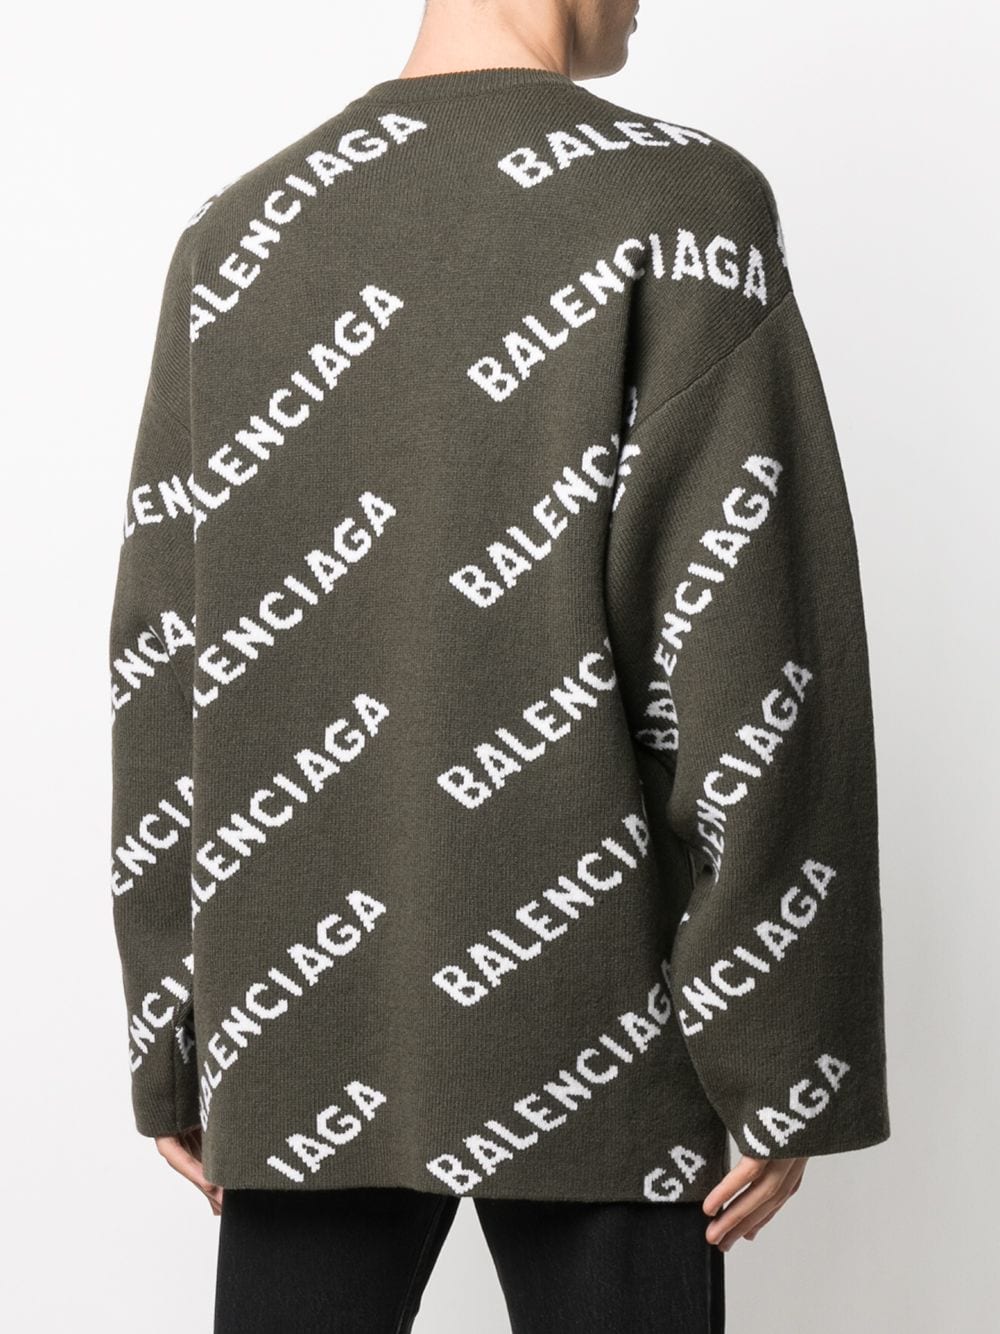 фото Balenciaga джемпер вязки интарсия с логотипом